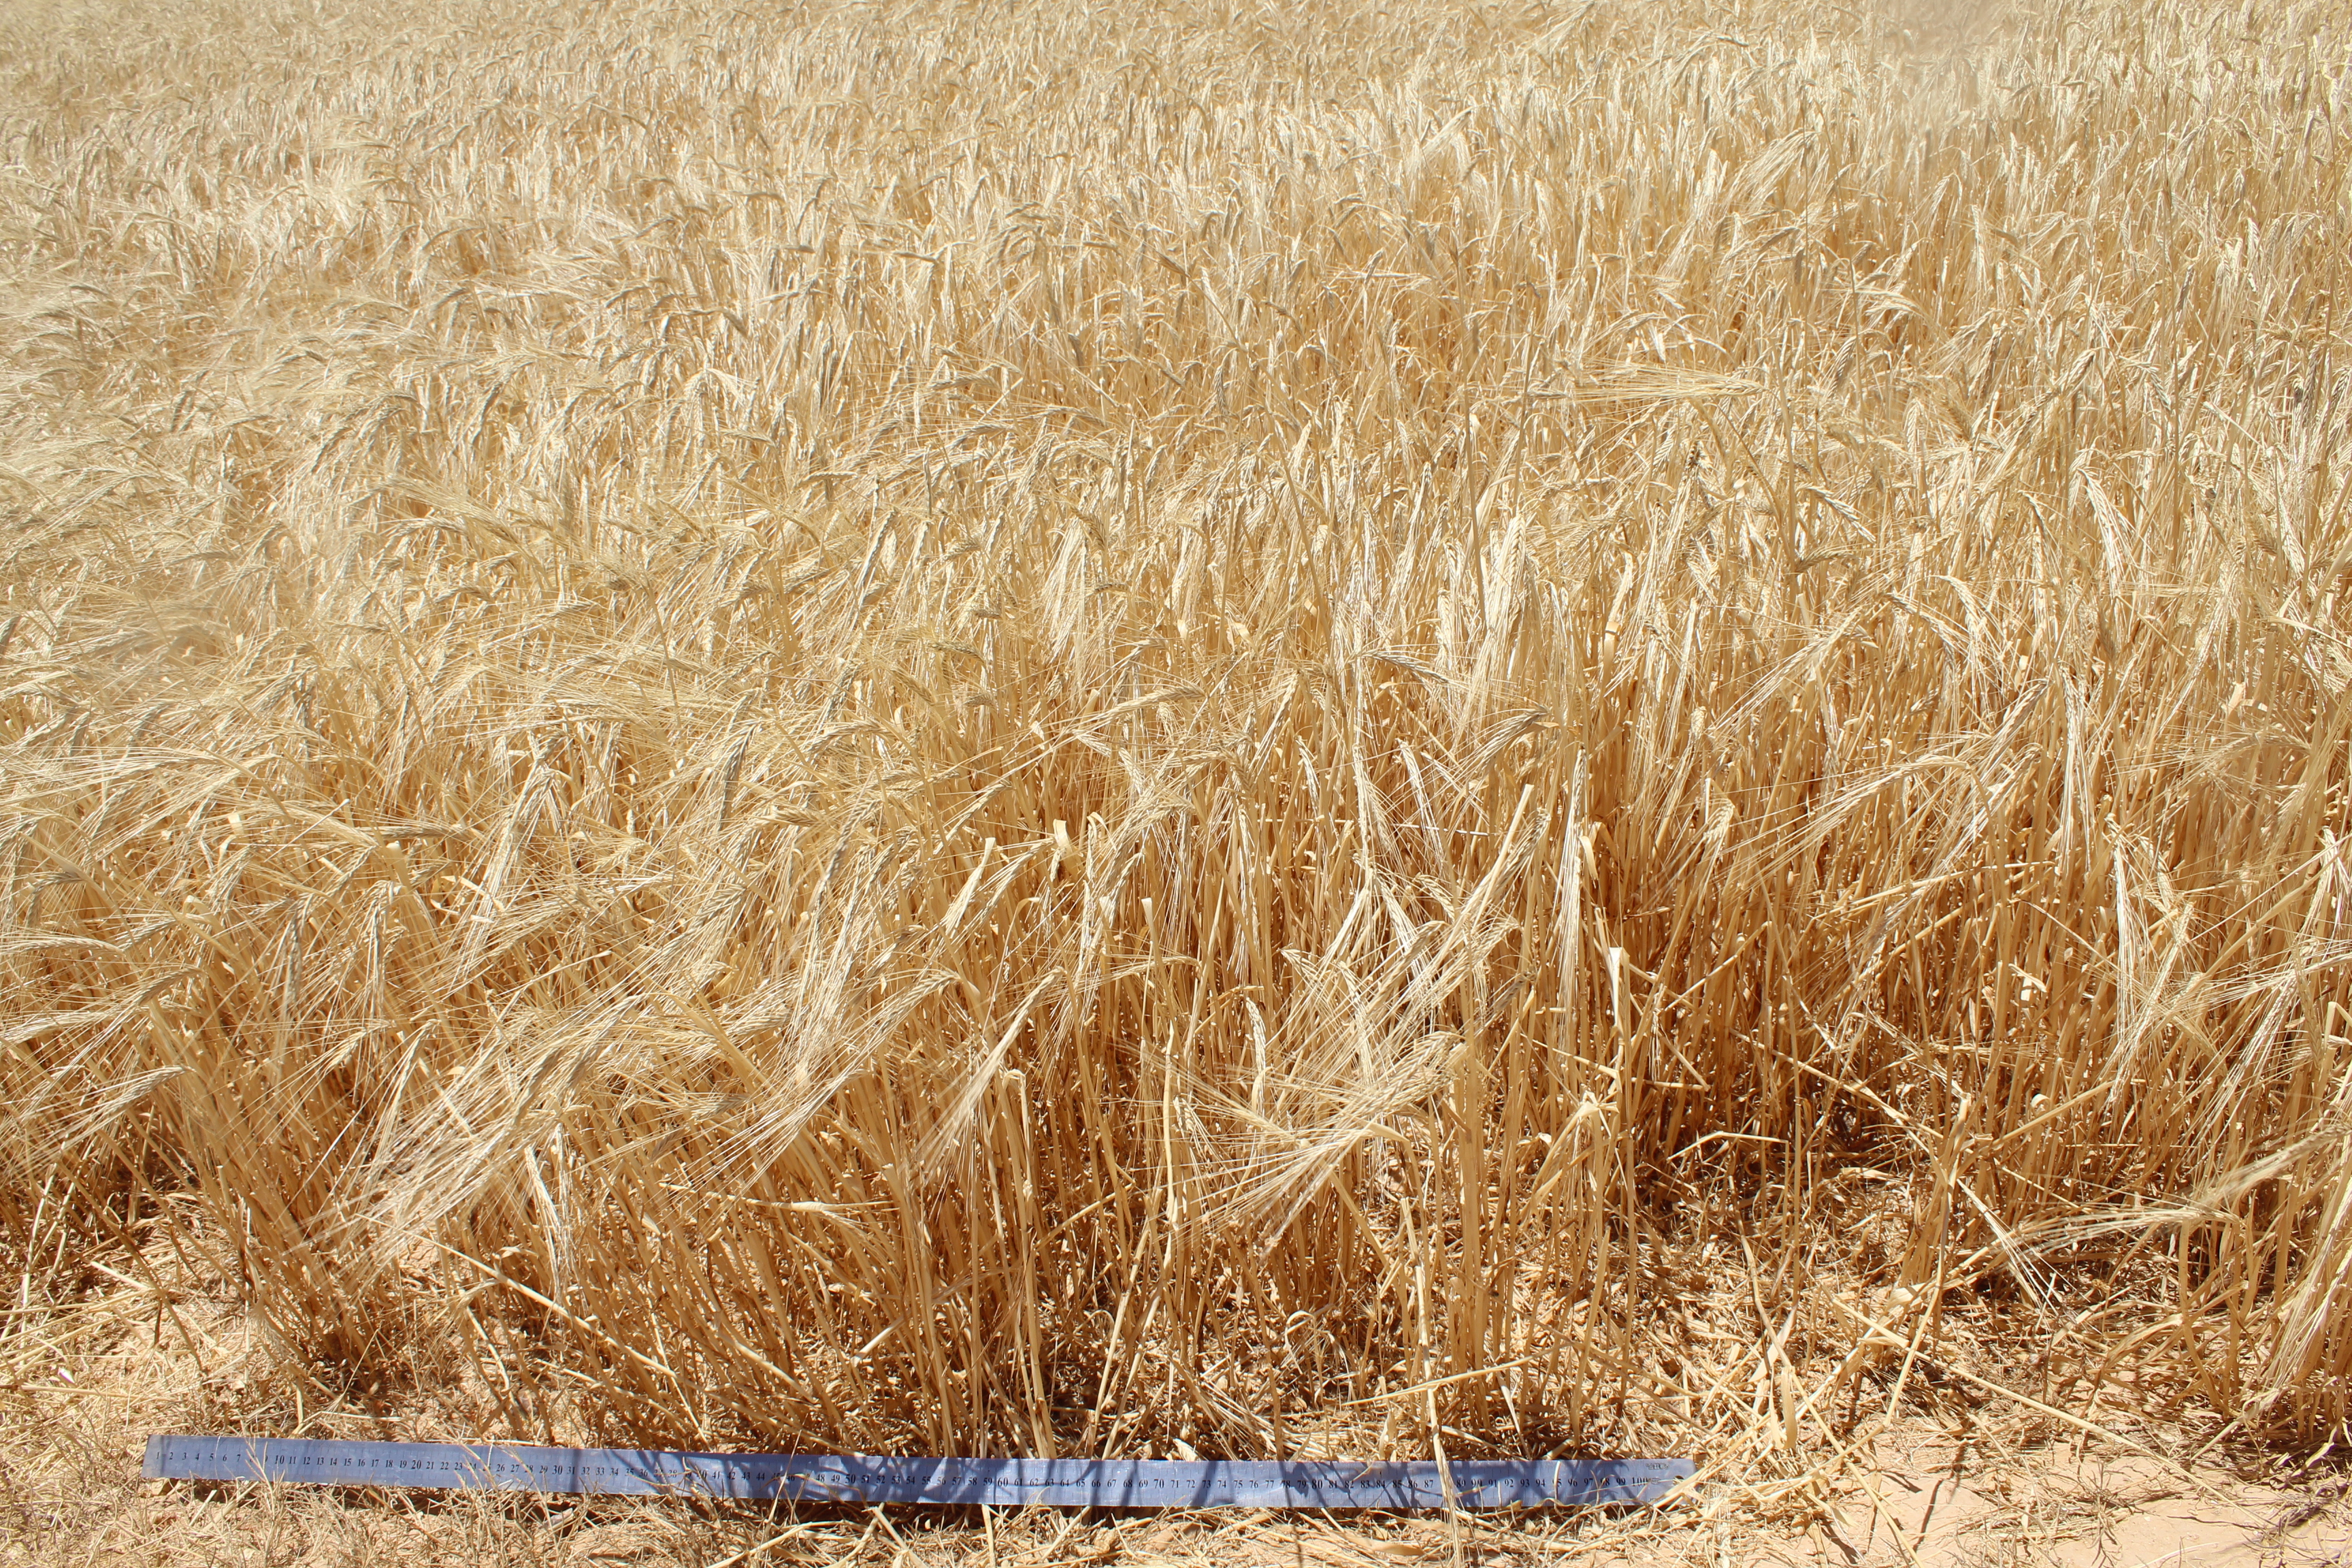 Marab barley